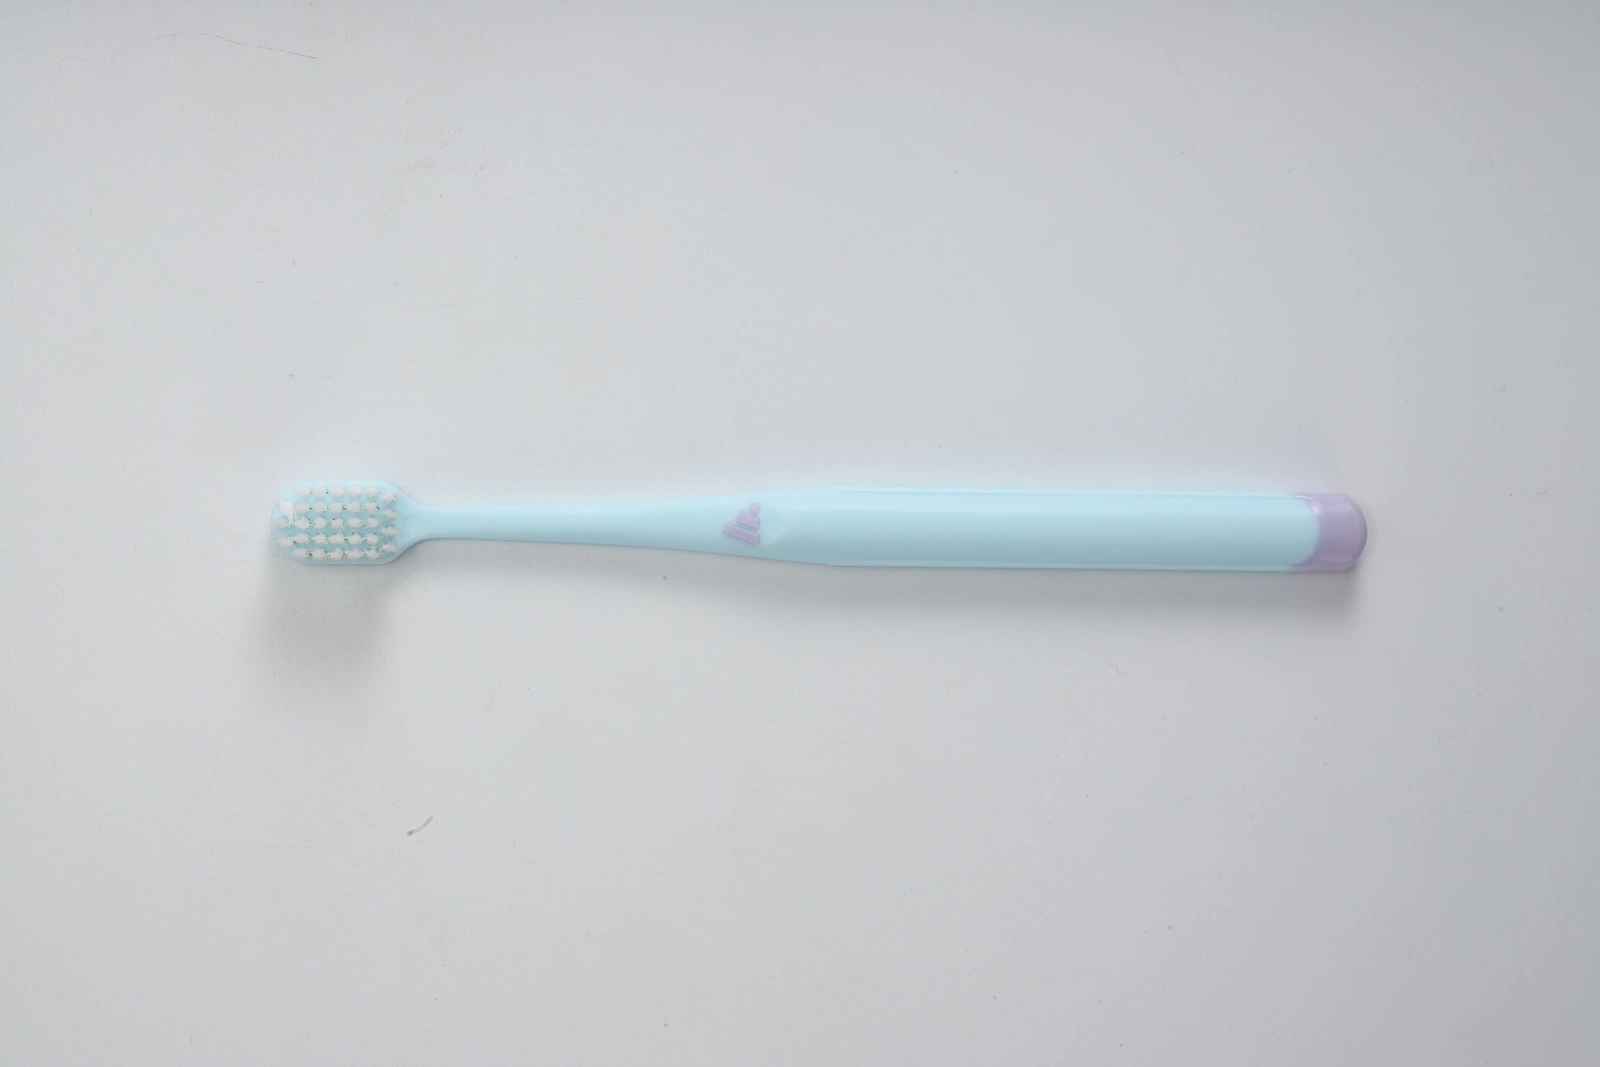 Good Quality Daily Home Use Plastic Custom Toothbrush